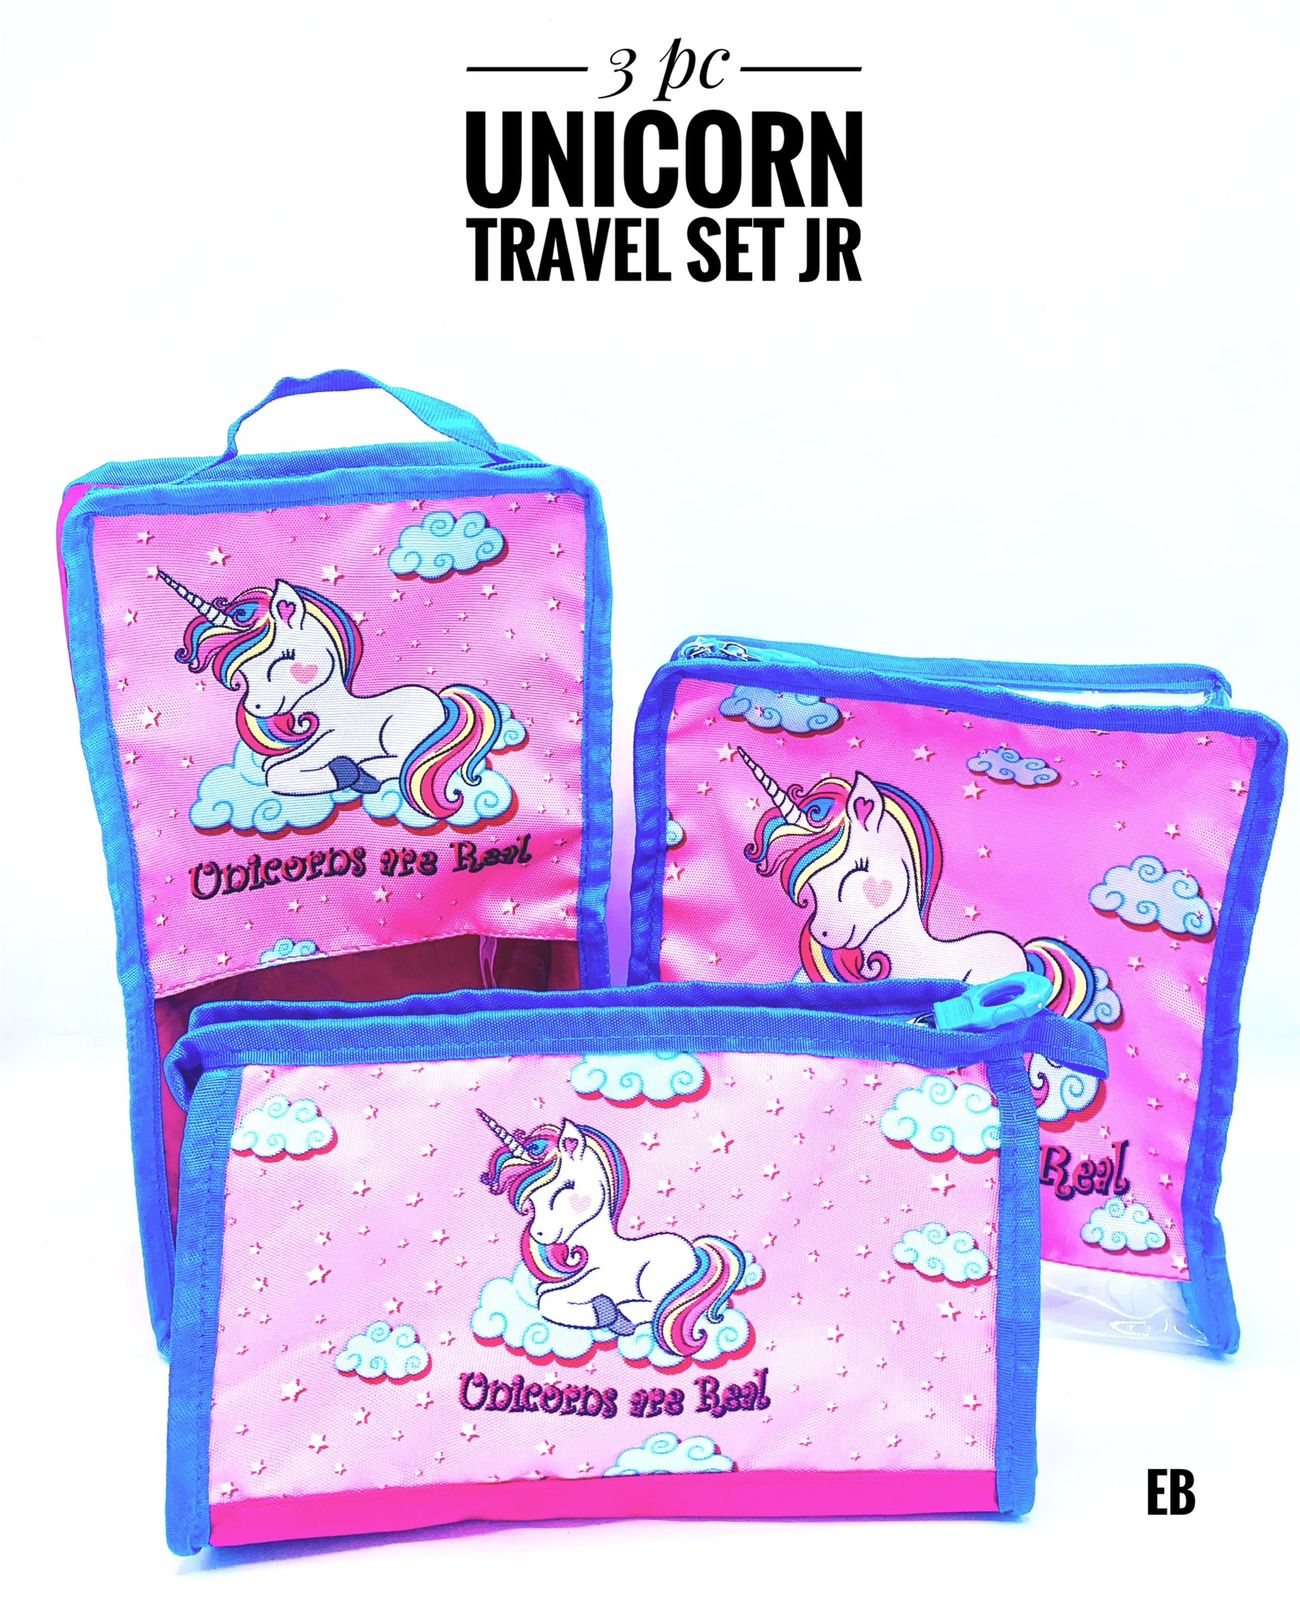 Unicorn Travel Set Jr.